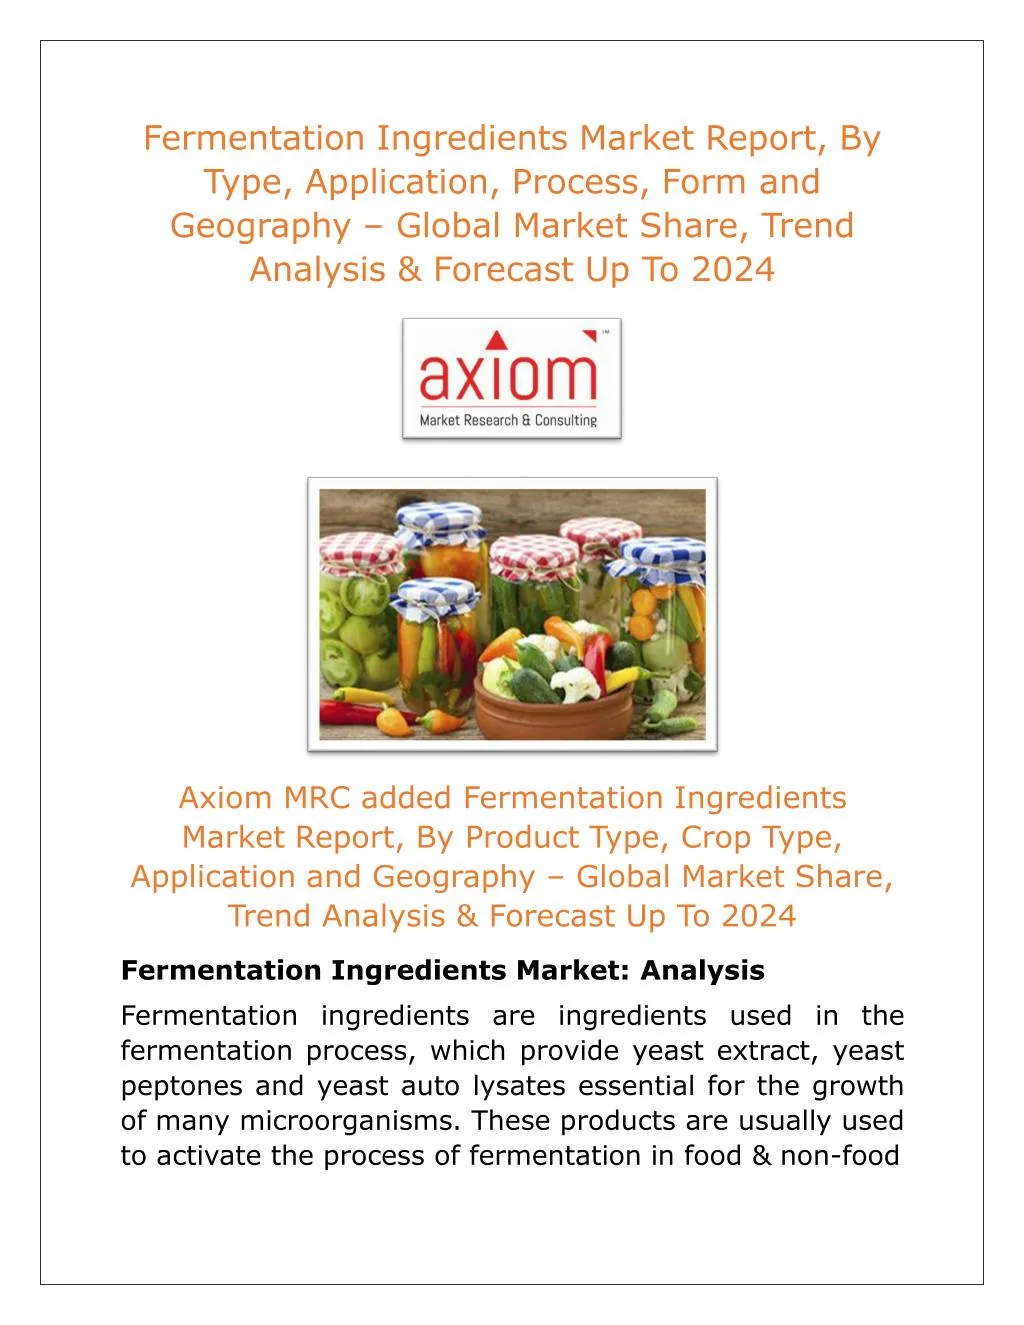 fermentation ingredients market report by type